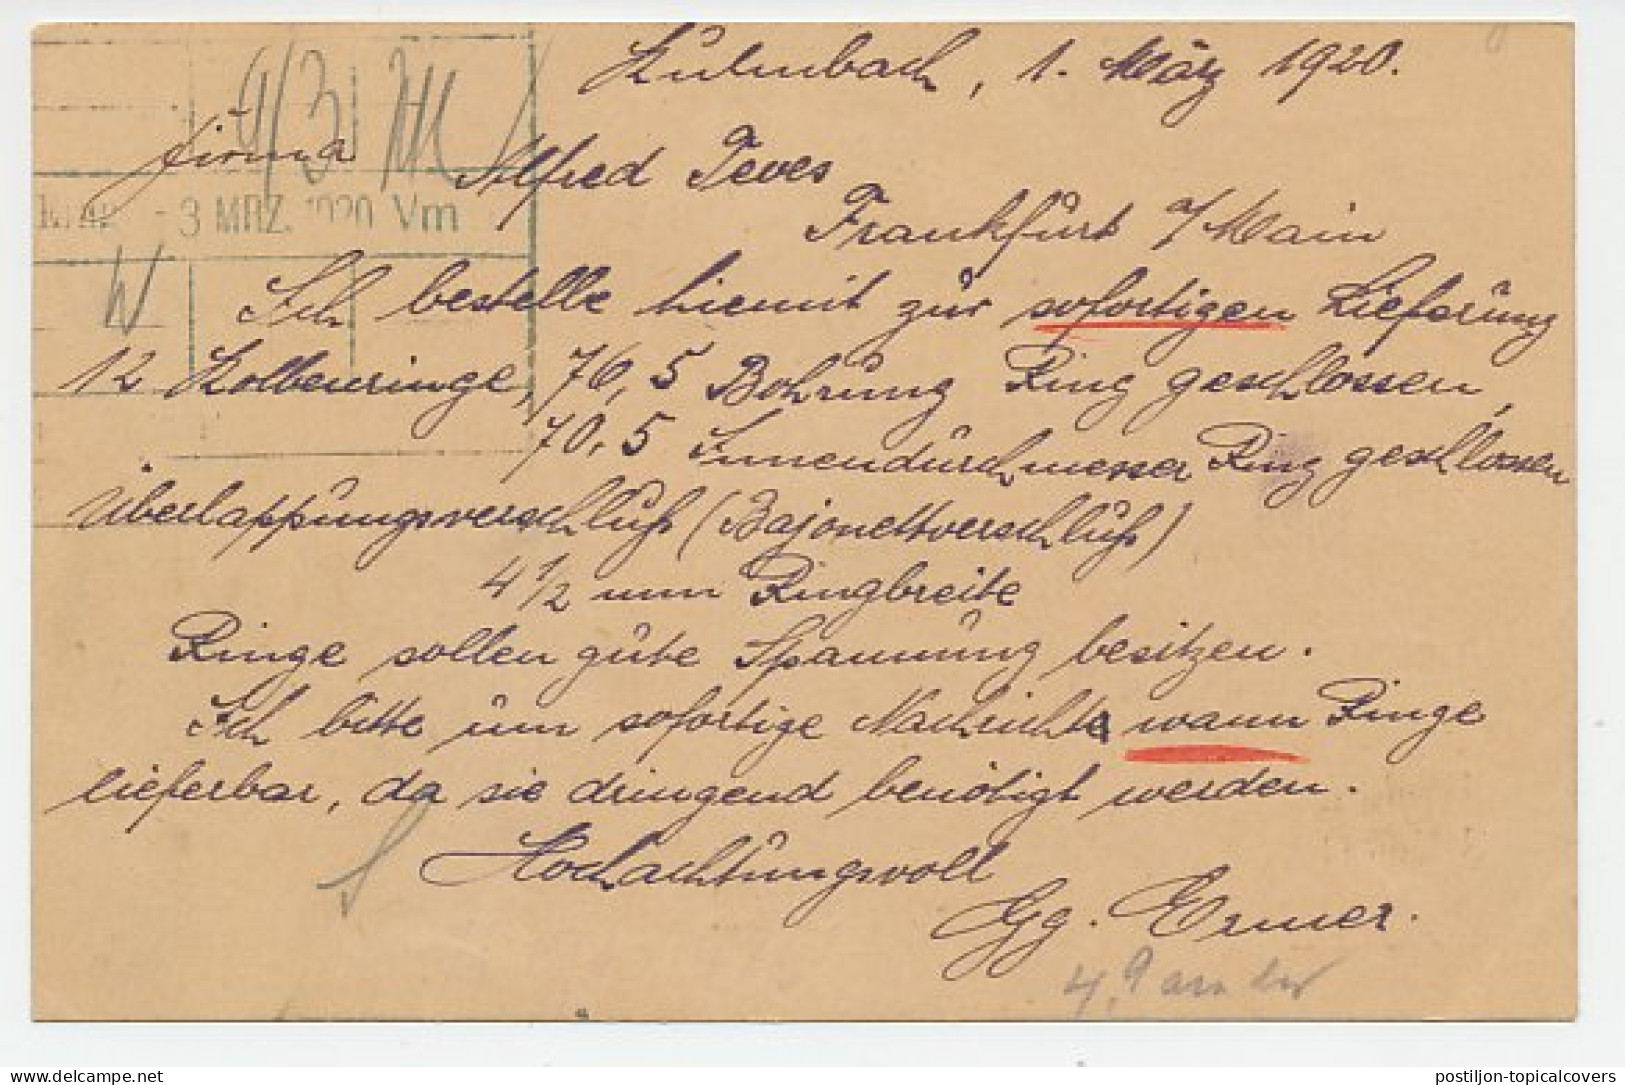 Postal Stationery / Cachet Bayern / Germany 1920 Car - Coches